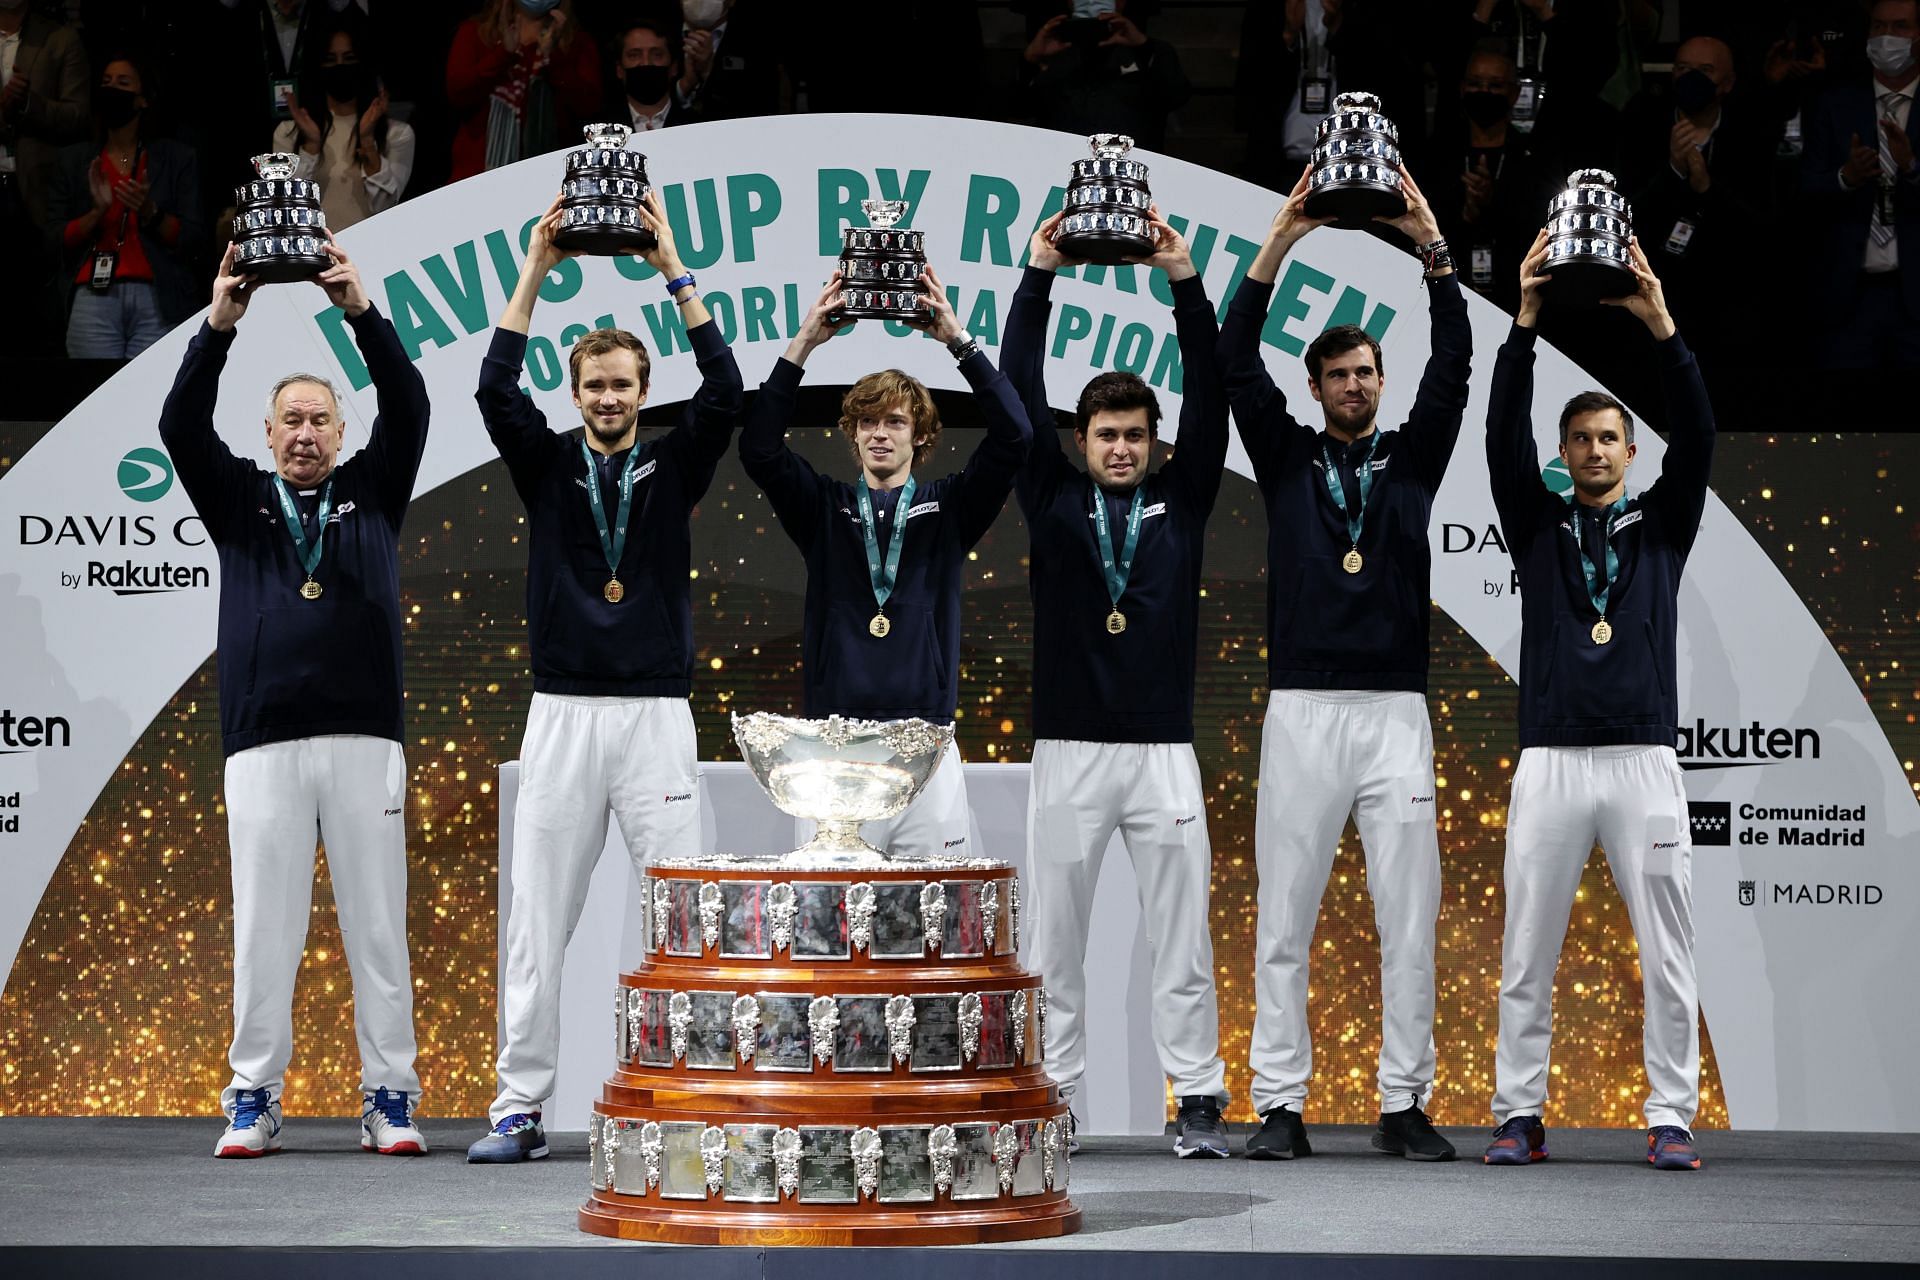 The Russian Tennis Federation team celebrate winning the 2021 Davis Cup Finals